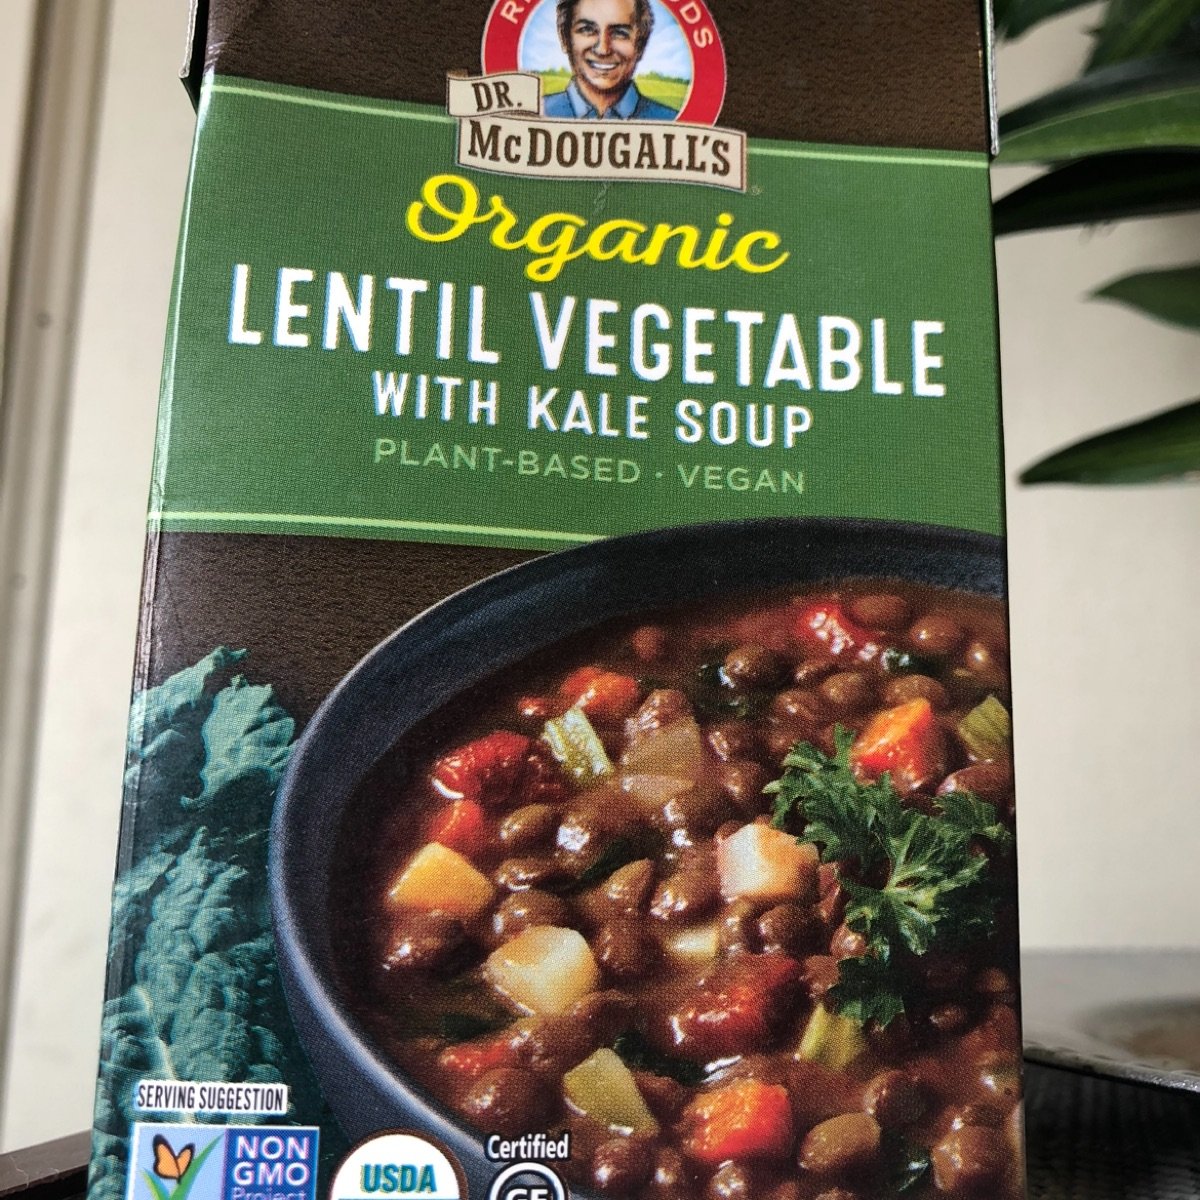 Organic Lentil Vegetable with Kale Soup